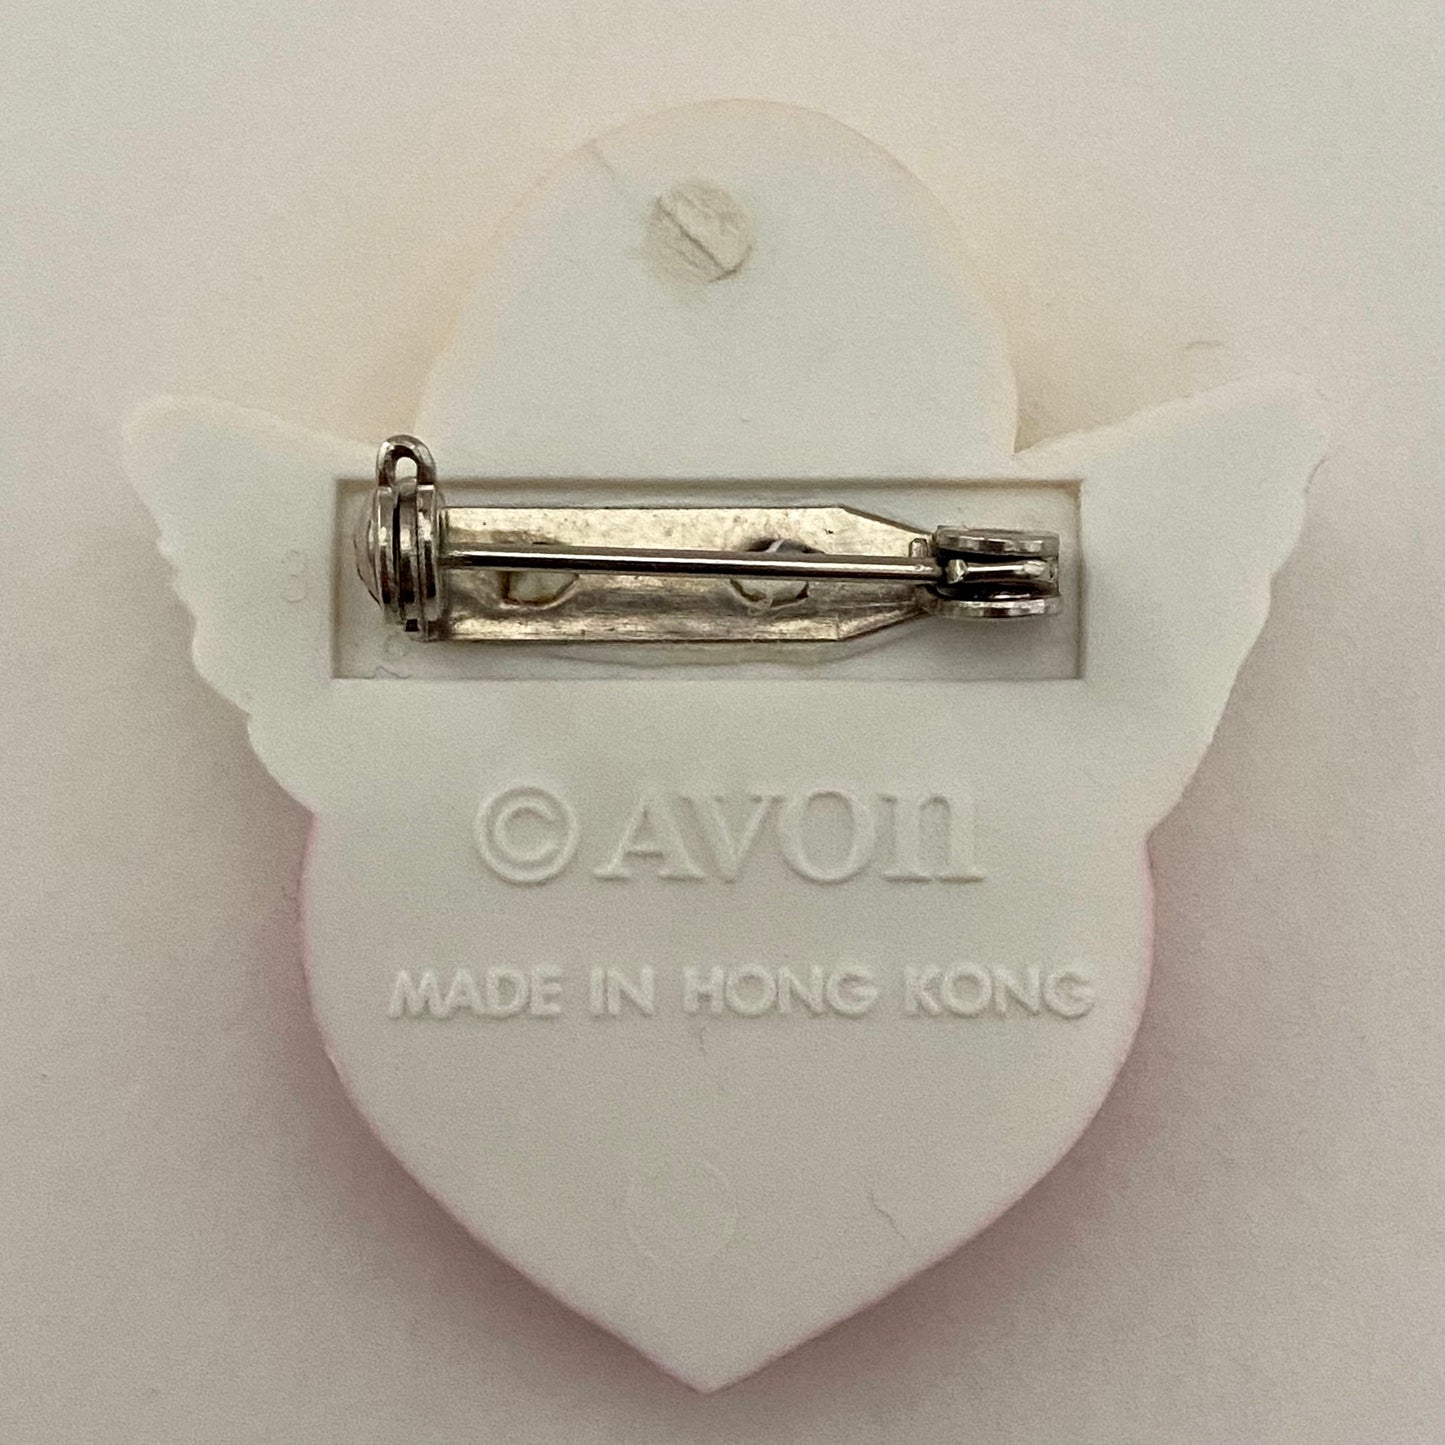 1983 Avon Lovable Cupid Pin